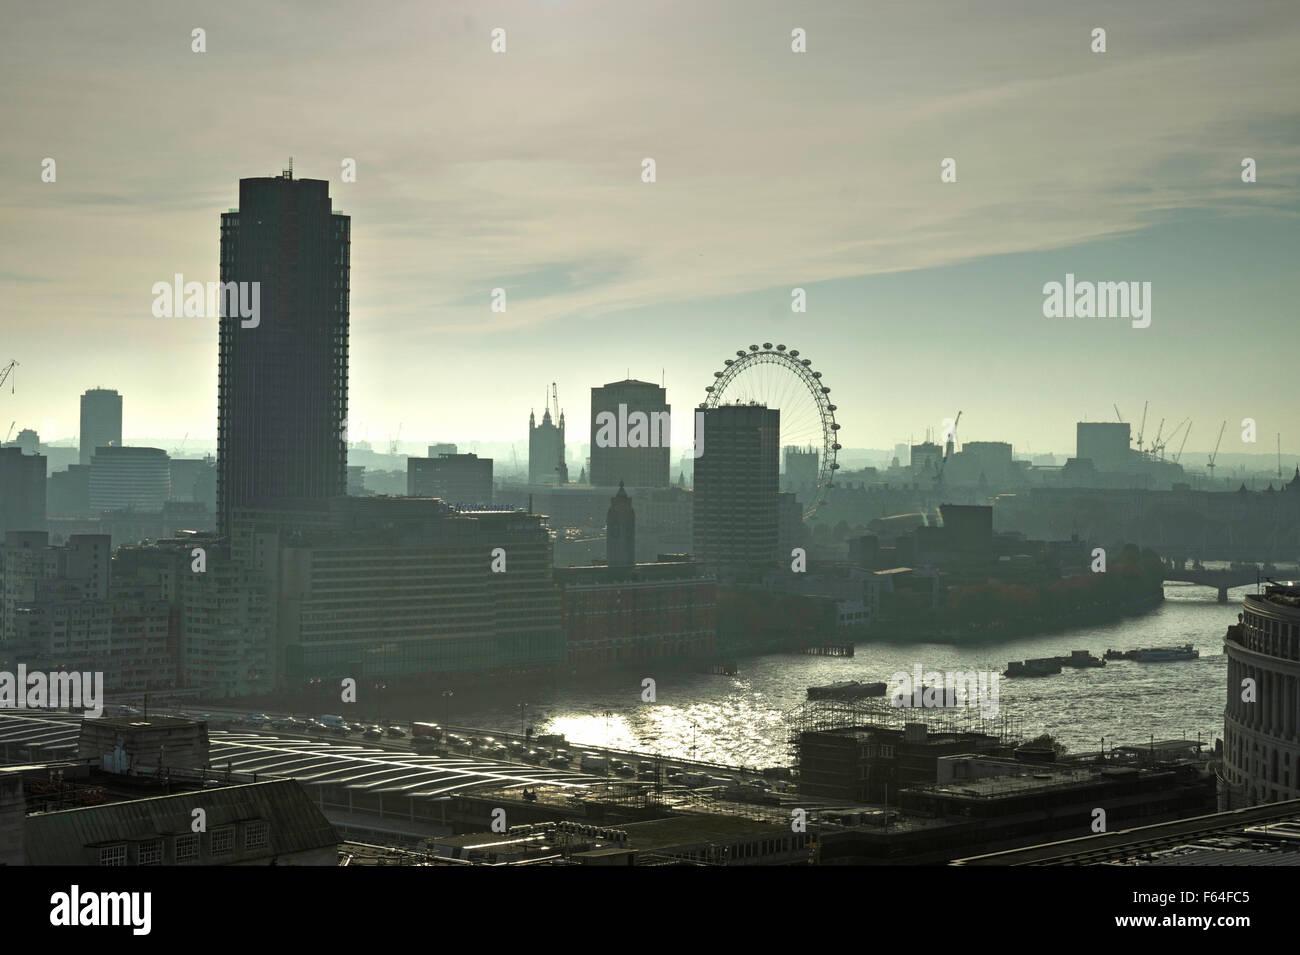 Misty skyline londinense. South Bank de Londres Foto de stock